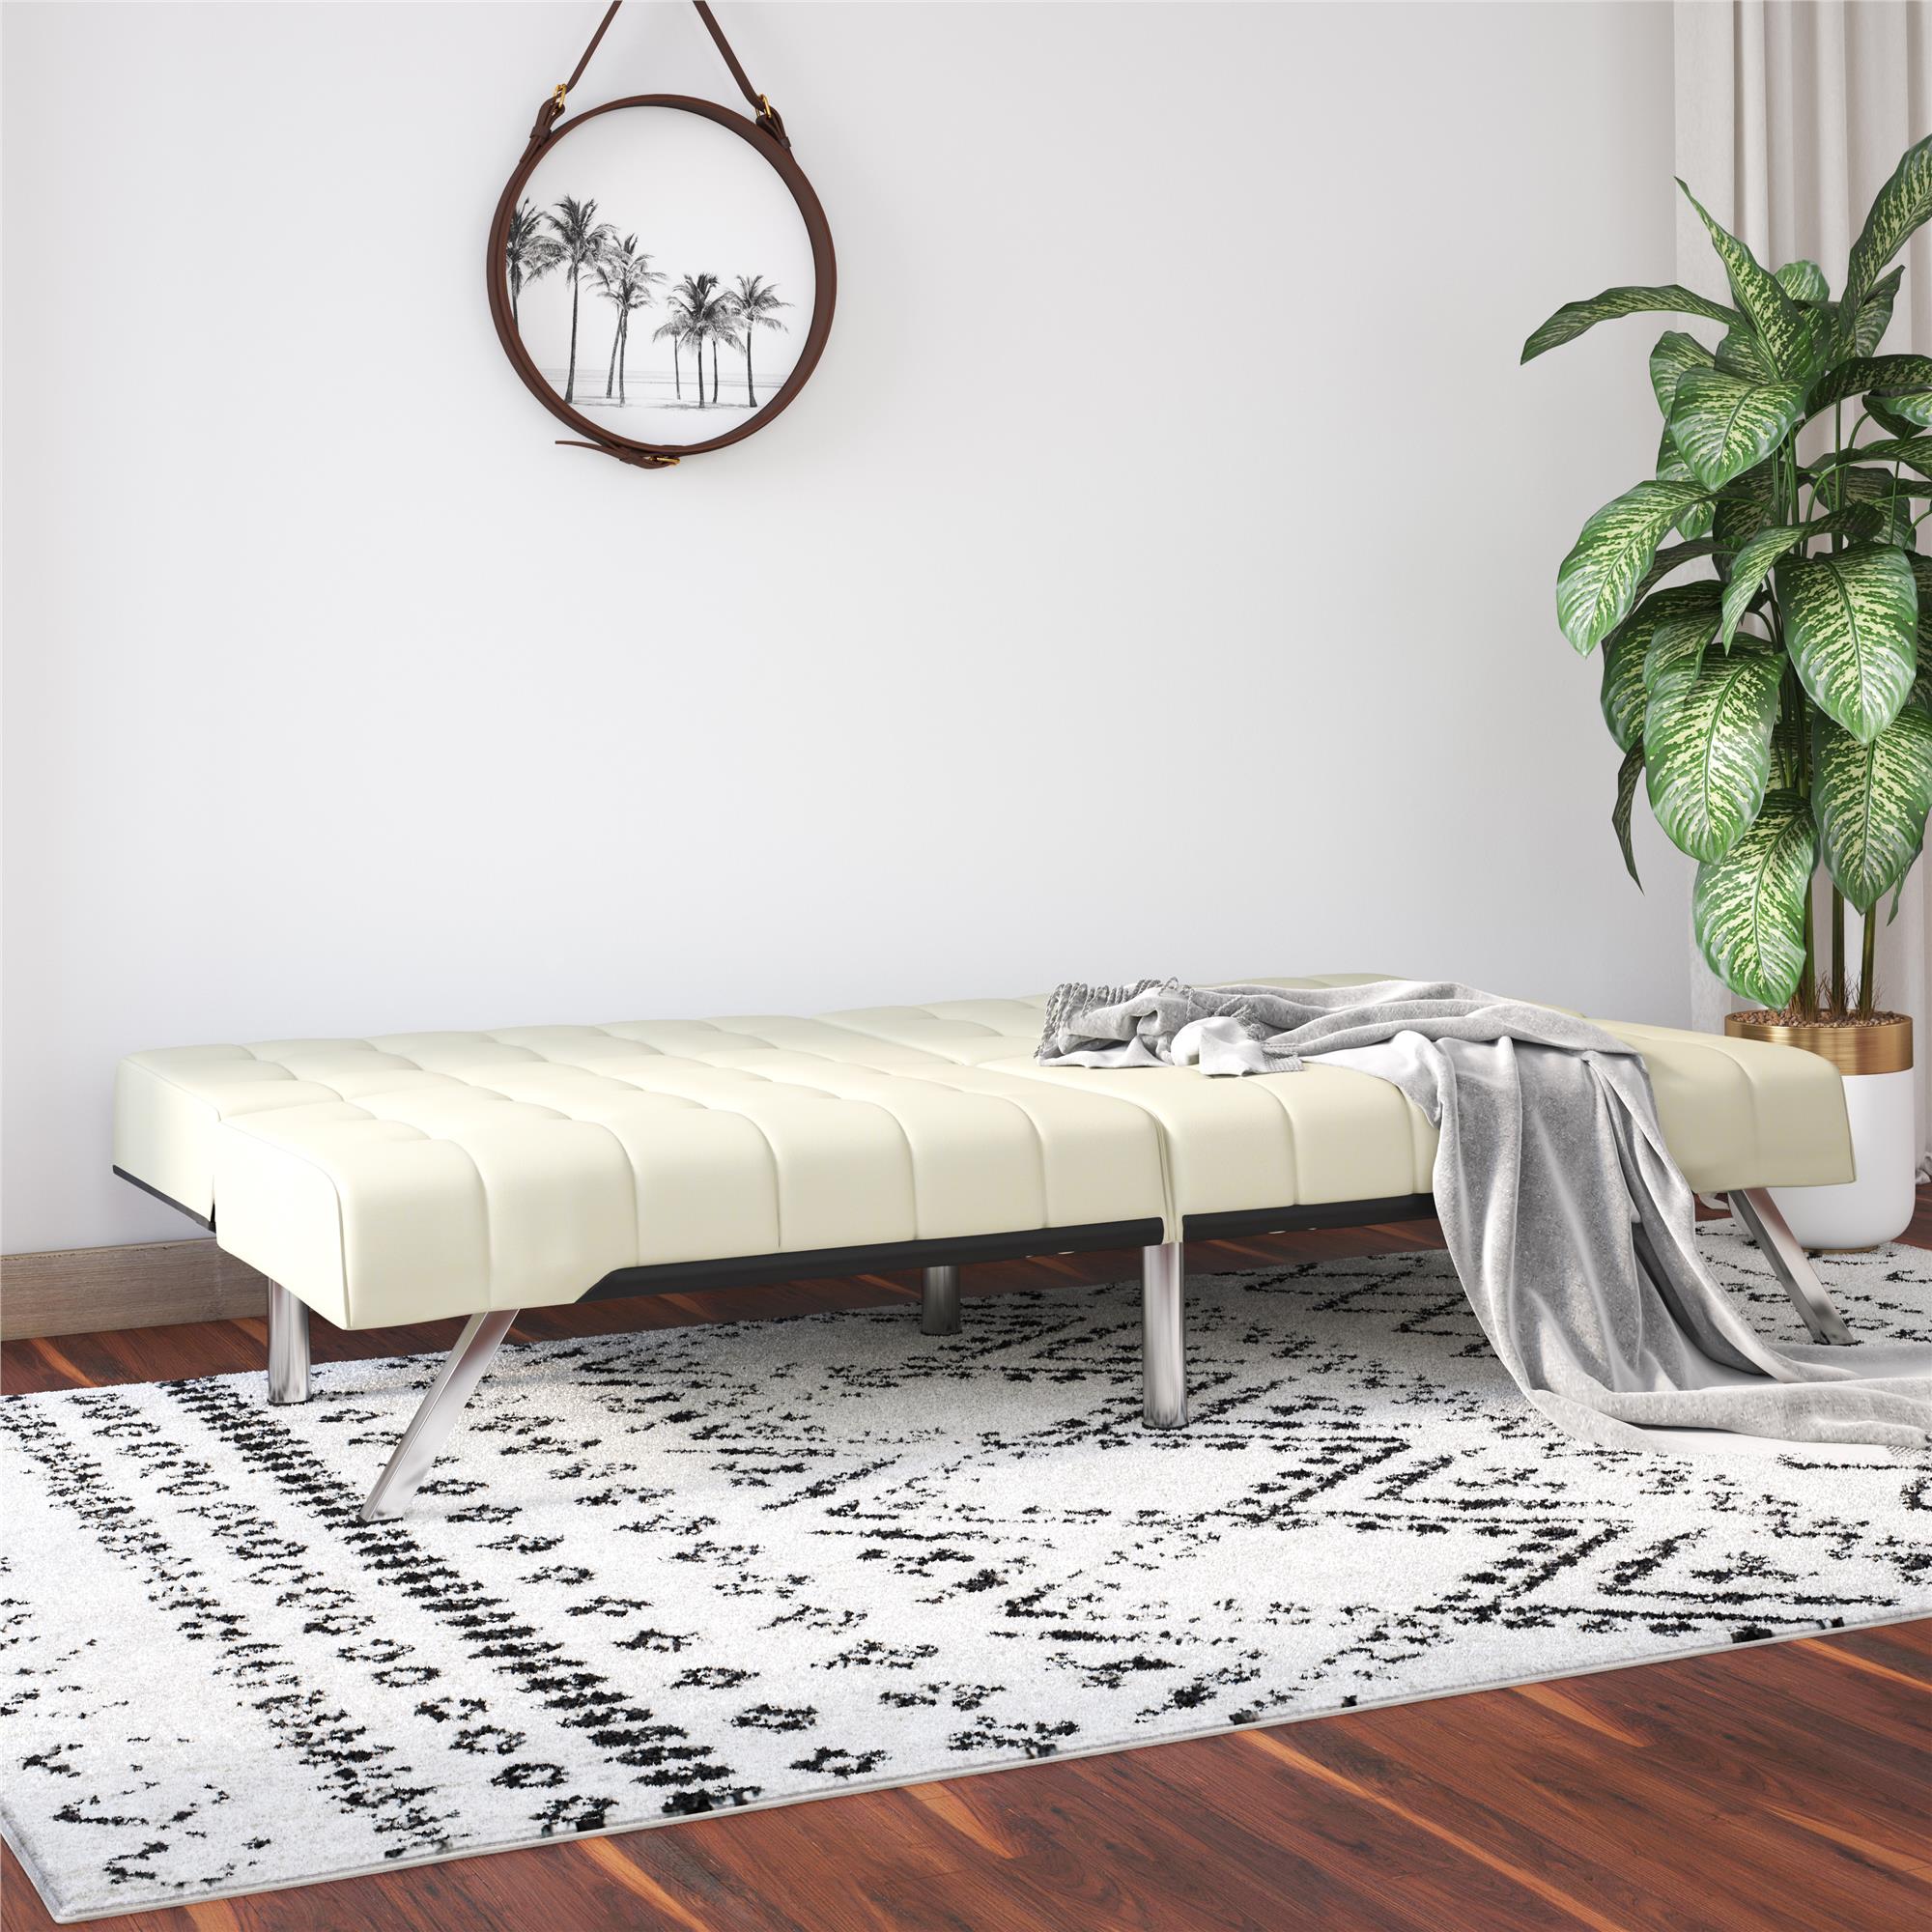 DHP Emily Convertible Tufted Futon Sofa, Vanilla Faux Leather - image 3 of 21